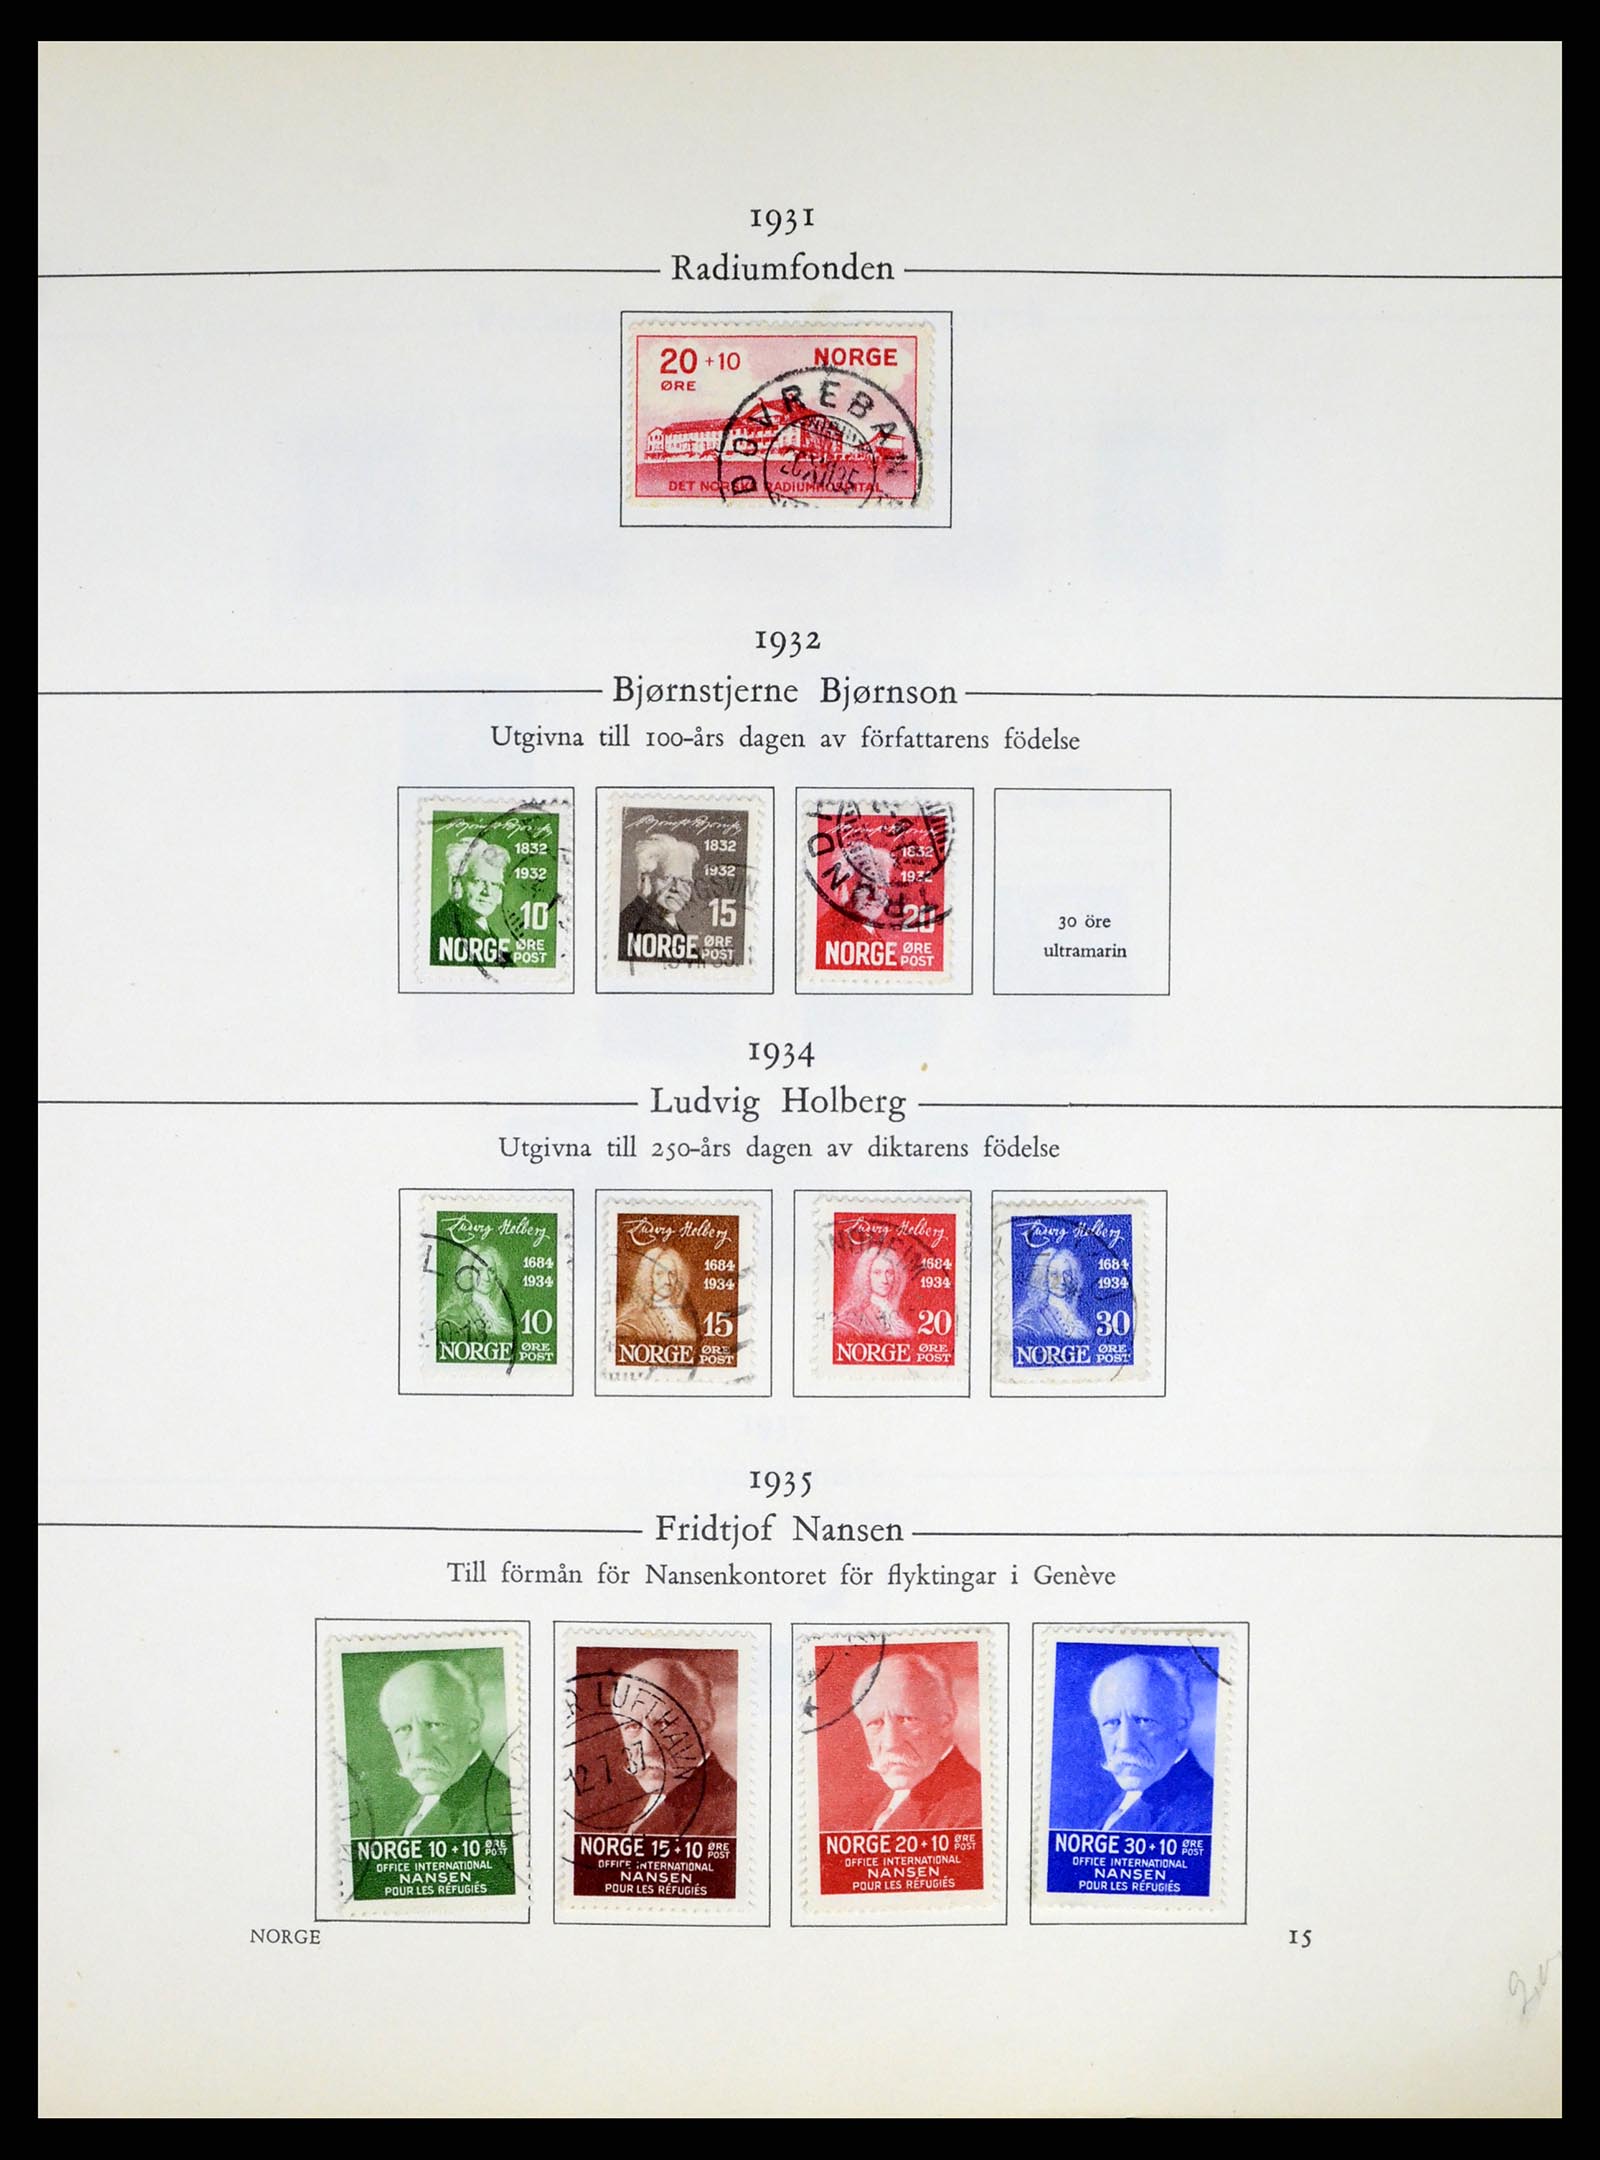 37387 015 - Stamp collection 37387 Scandinavia 1851-1960.